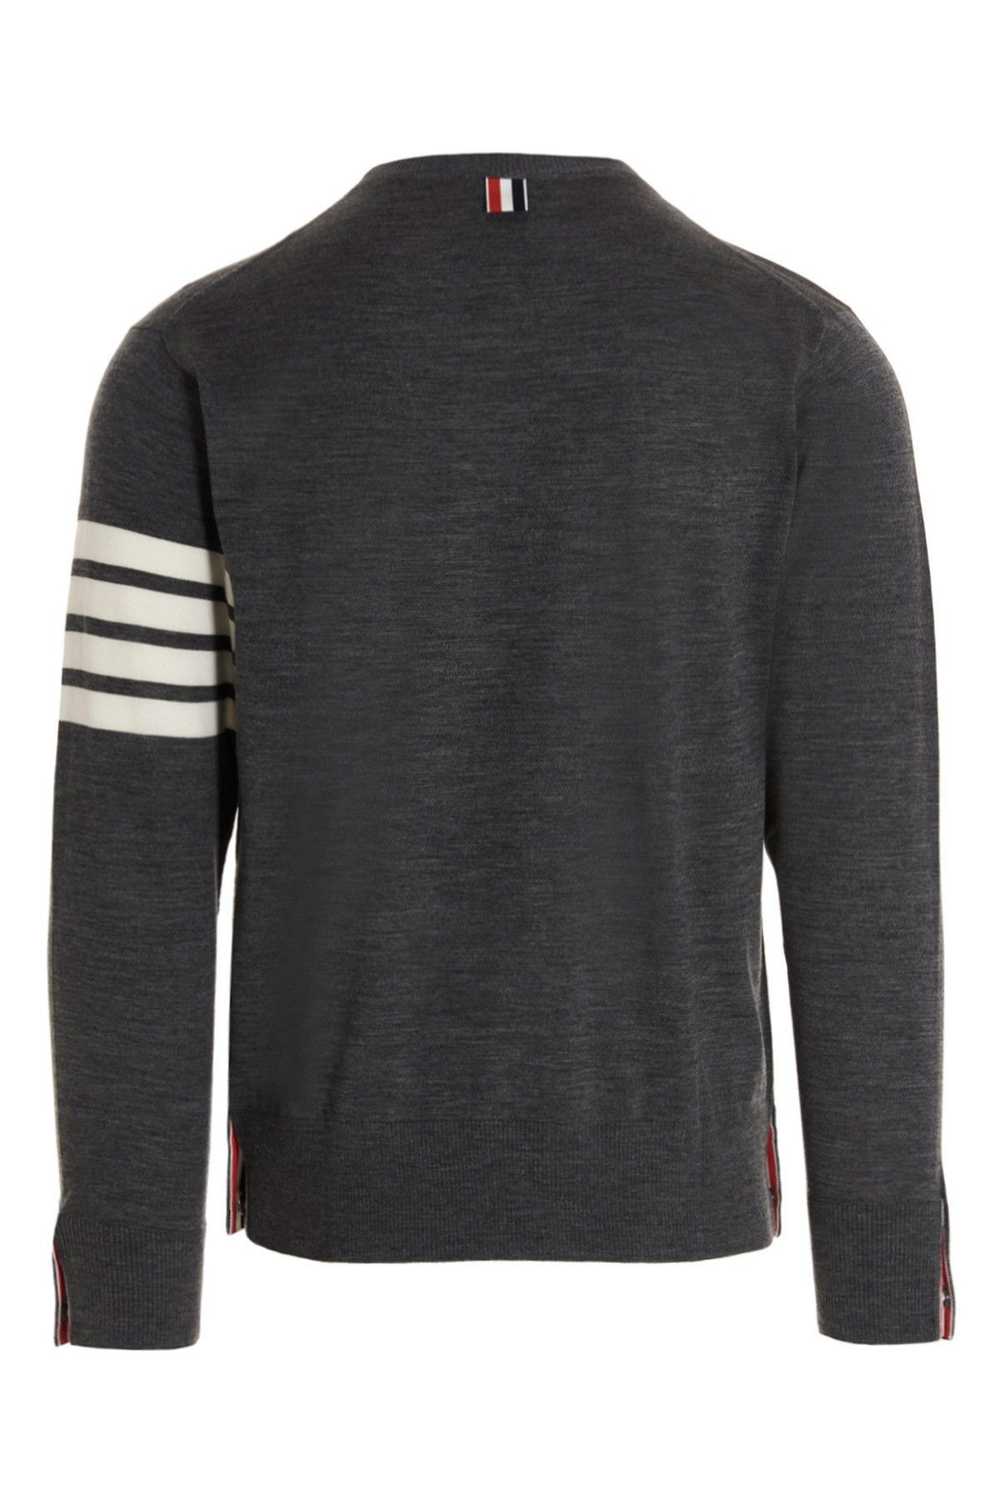 Thom Browne '4 bar' sweater - image 2